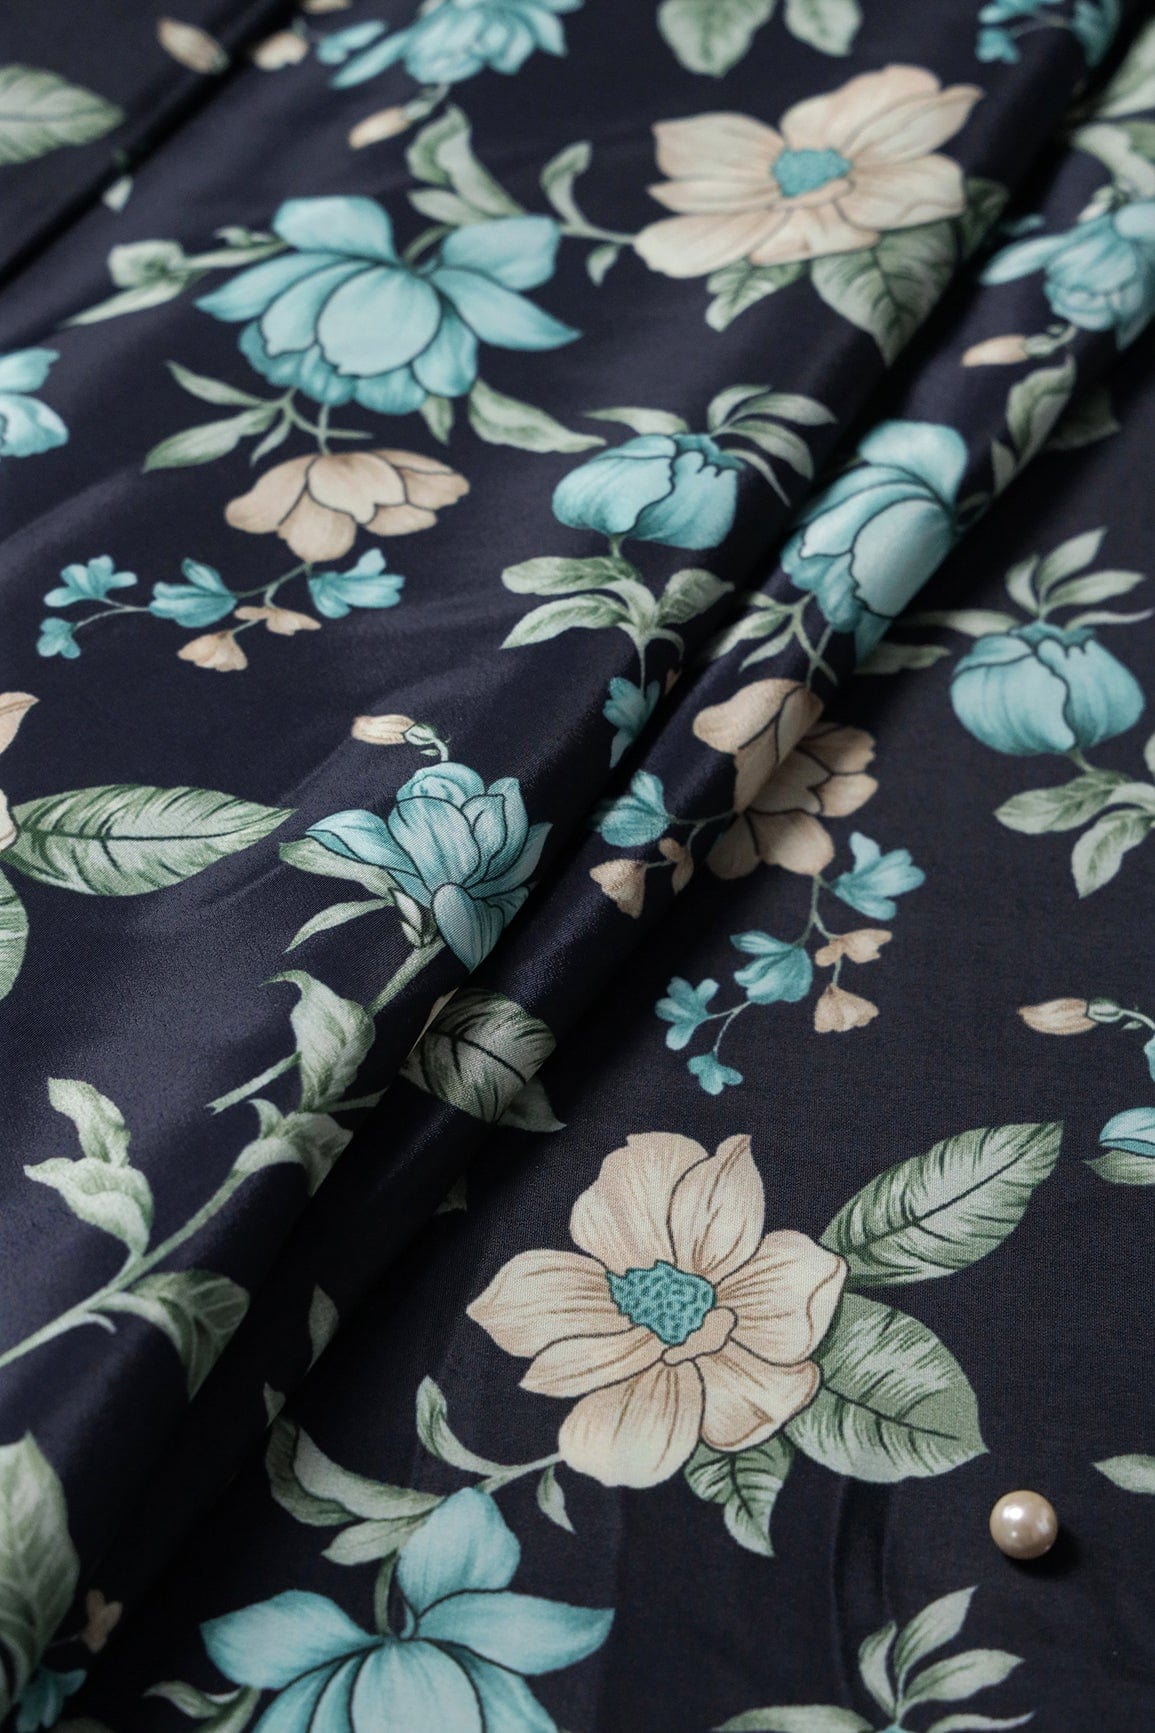 doeraa Prints Teal And Light Beige Floral Pattern Digital Print On Dark Navy Blue Malai Crepe Fabric